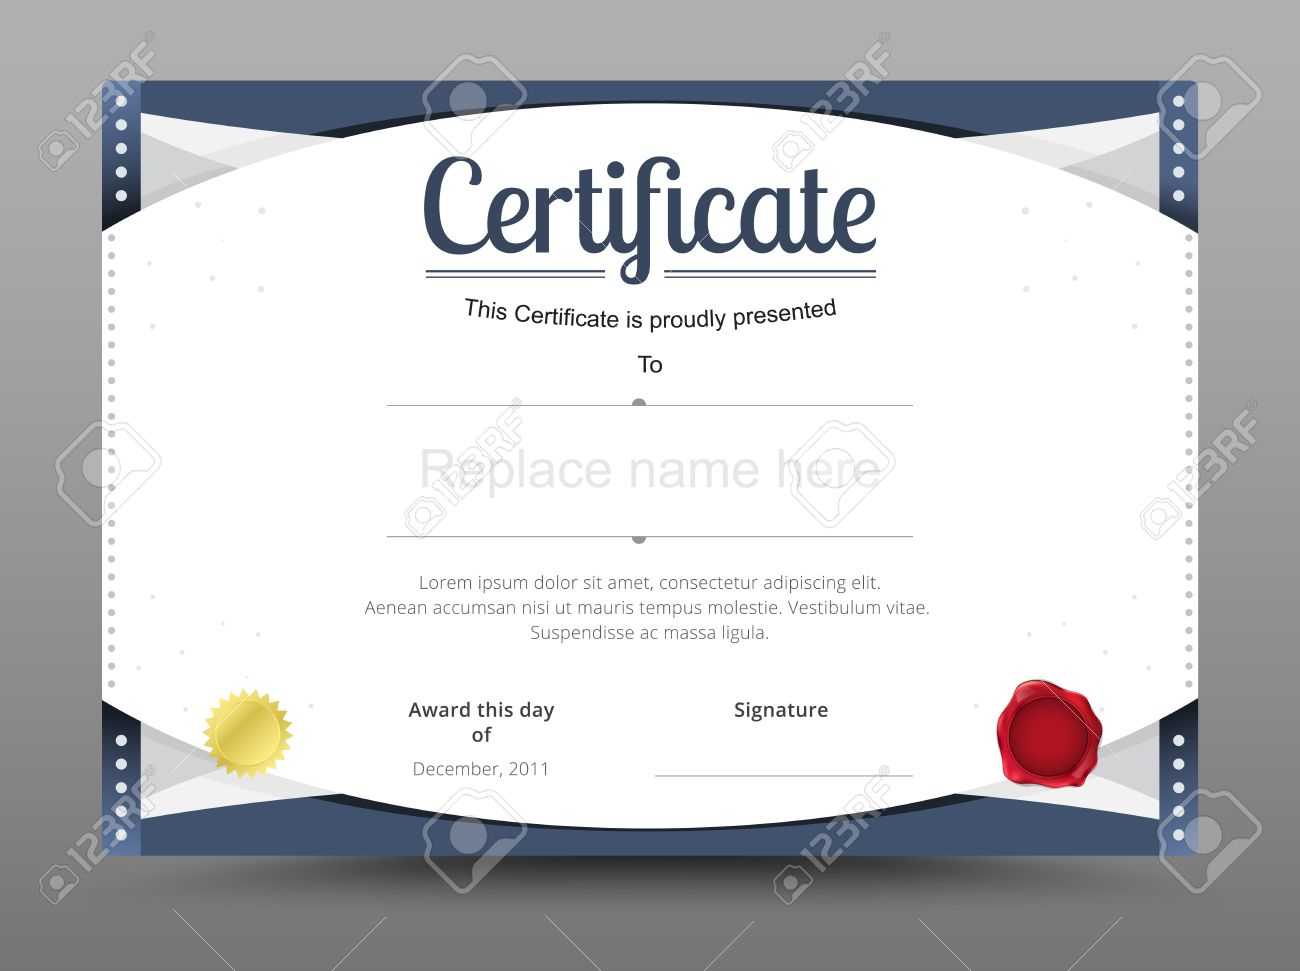 Elegant Certificate Template. Business Certificate Formal Theme Pertaining To Elegant Certificate Templates Free